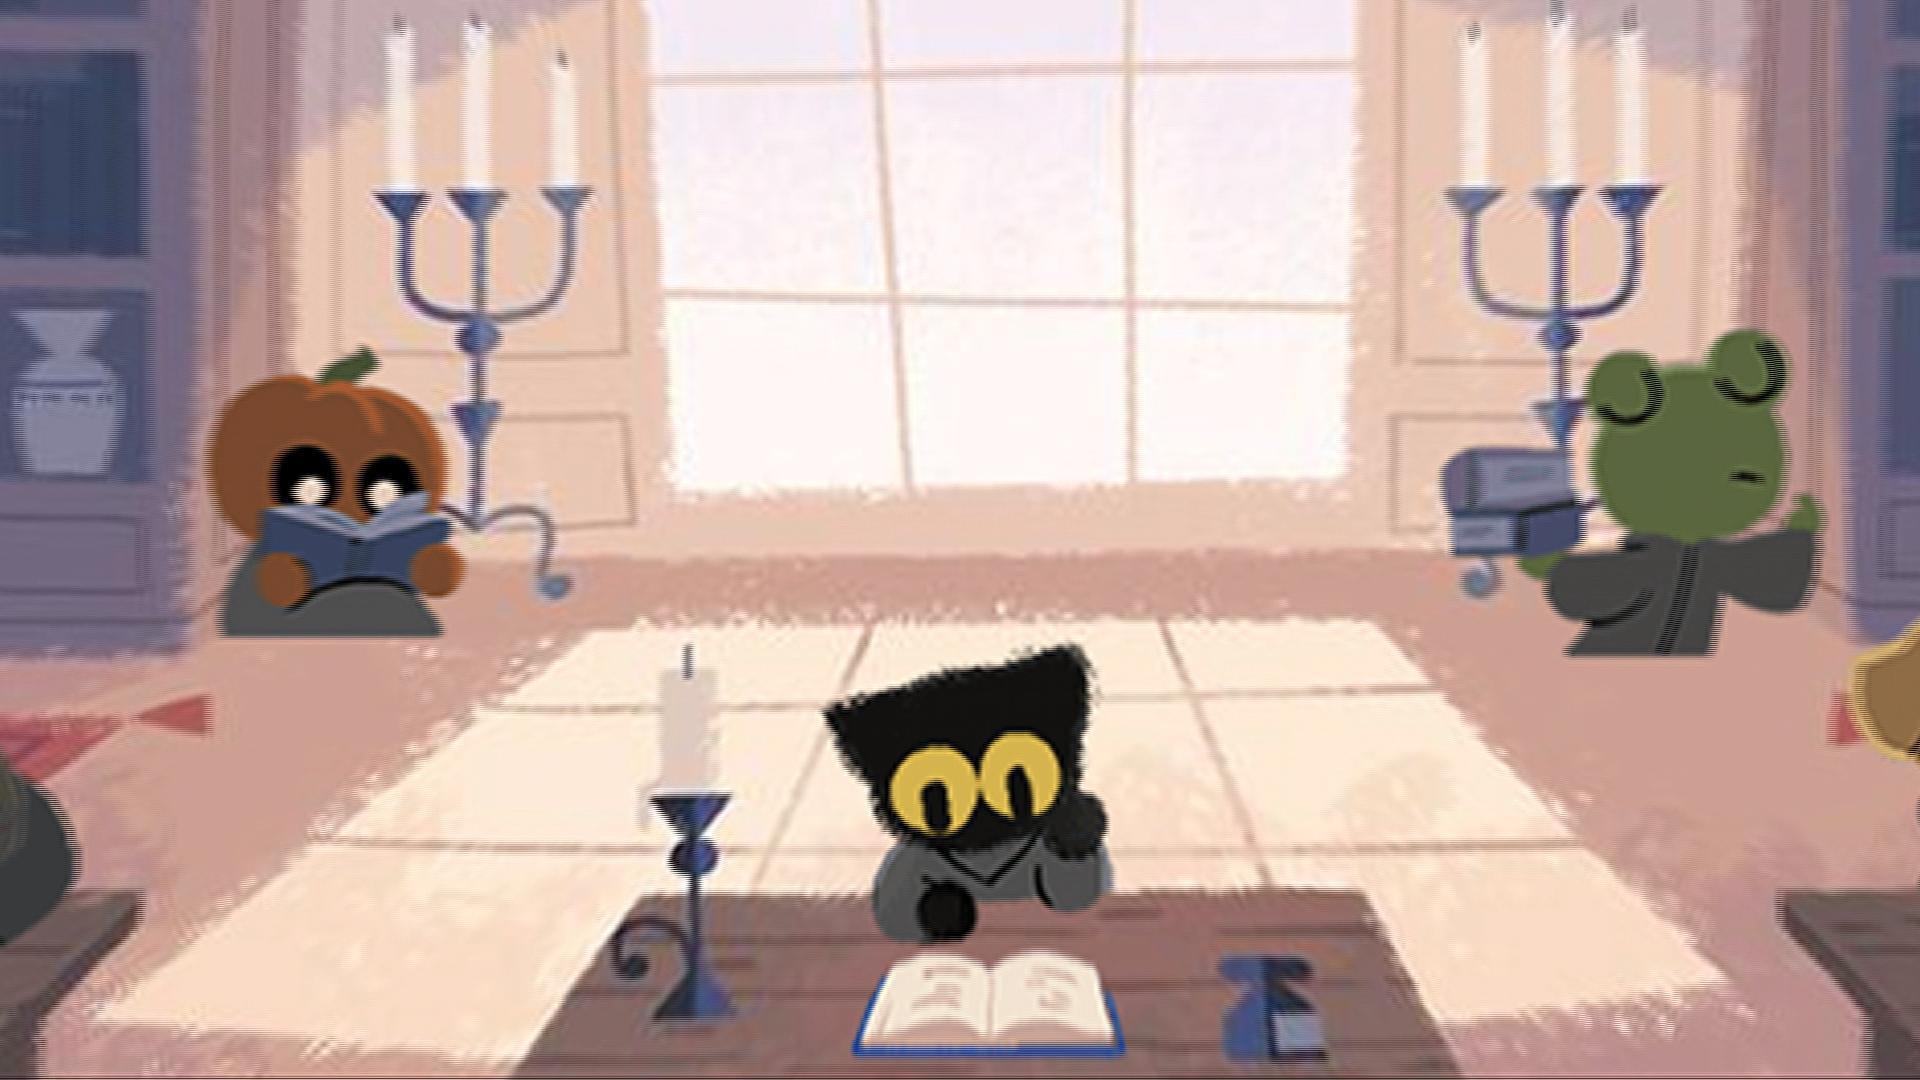 Halloween 2016 (Magic Cat Academy), Google Doodle